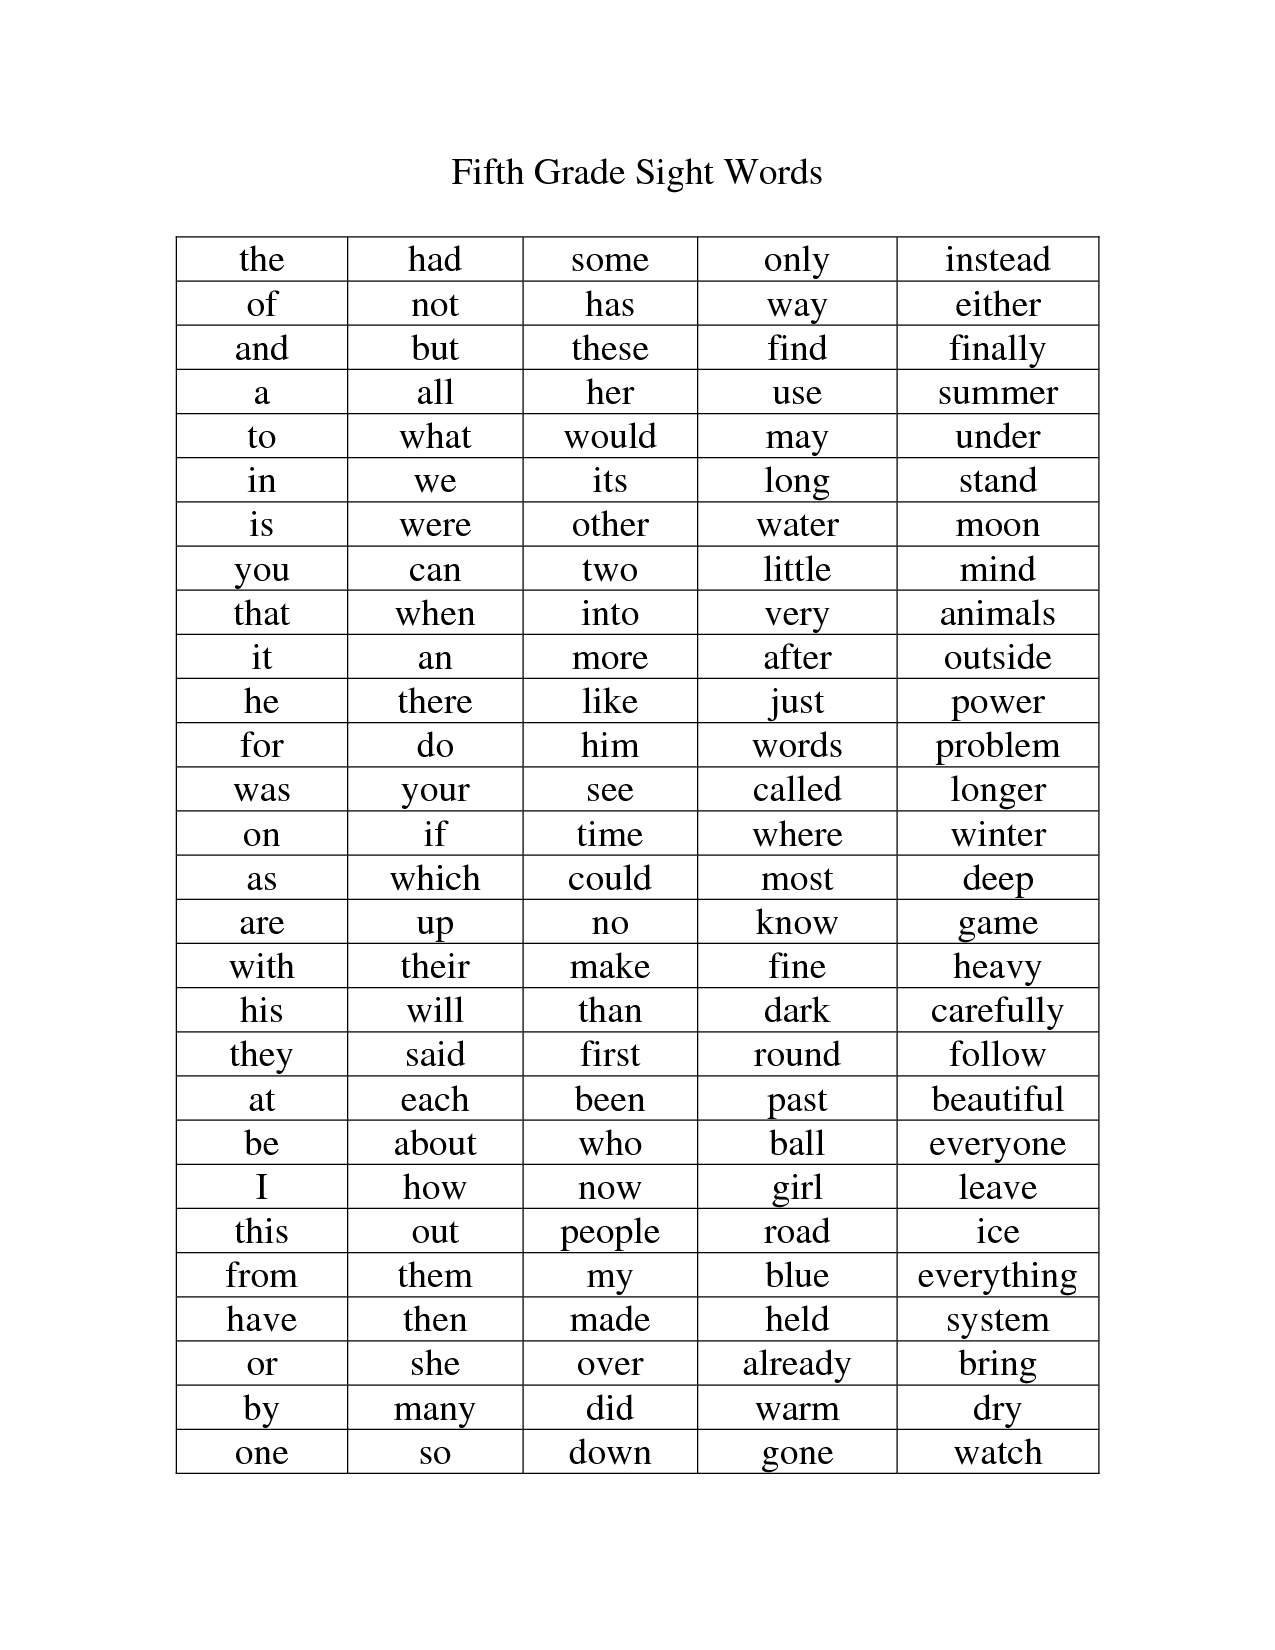 5th Grade Sight Word List Image